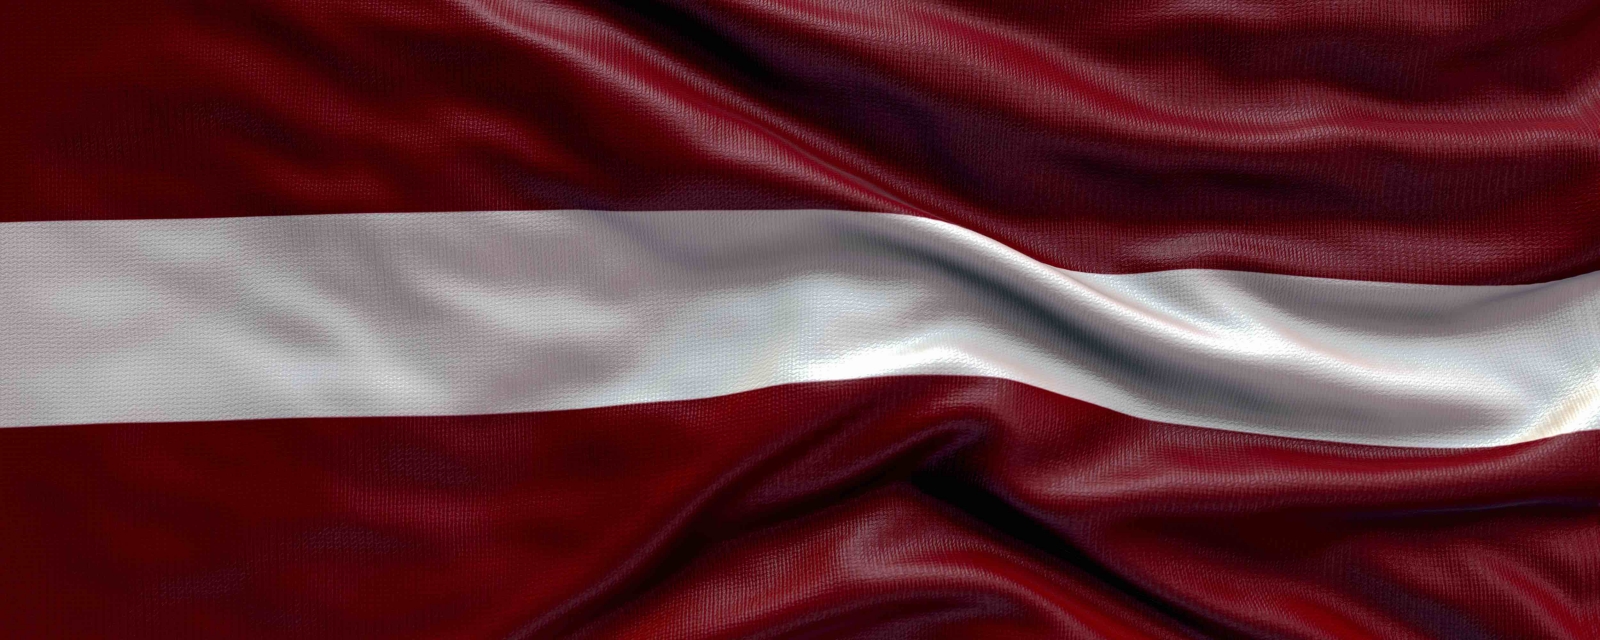 Развевающийся флаг Латвии - Флаг Латвии